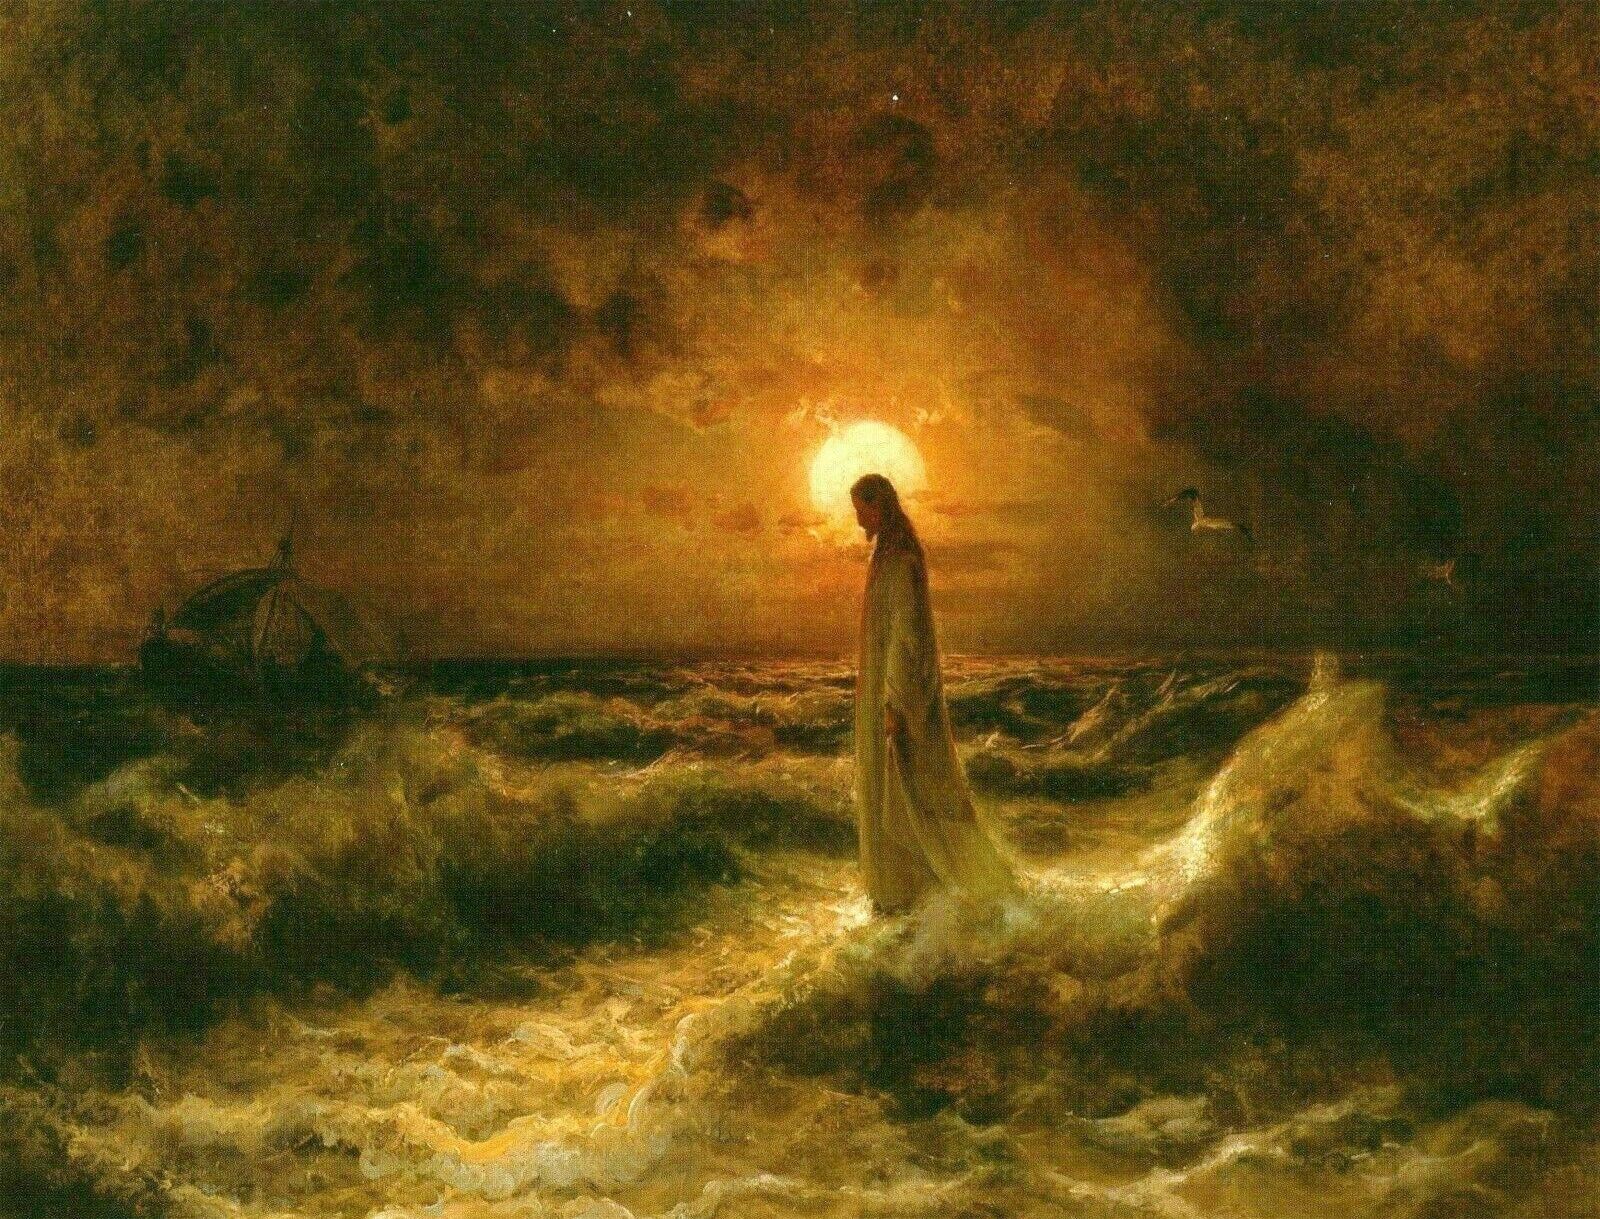 JESUS CHRIST 8.5X11 WALK ON WATER PHOTO GOD FATHER SON HEAVEN ANGEL REPRINT